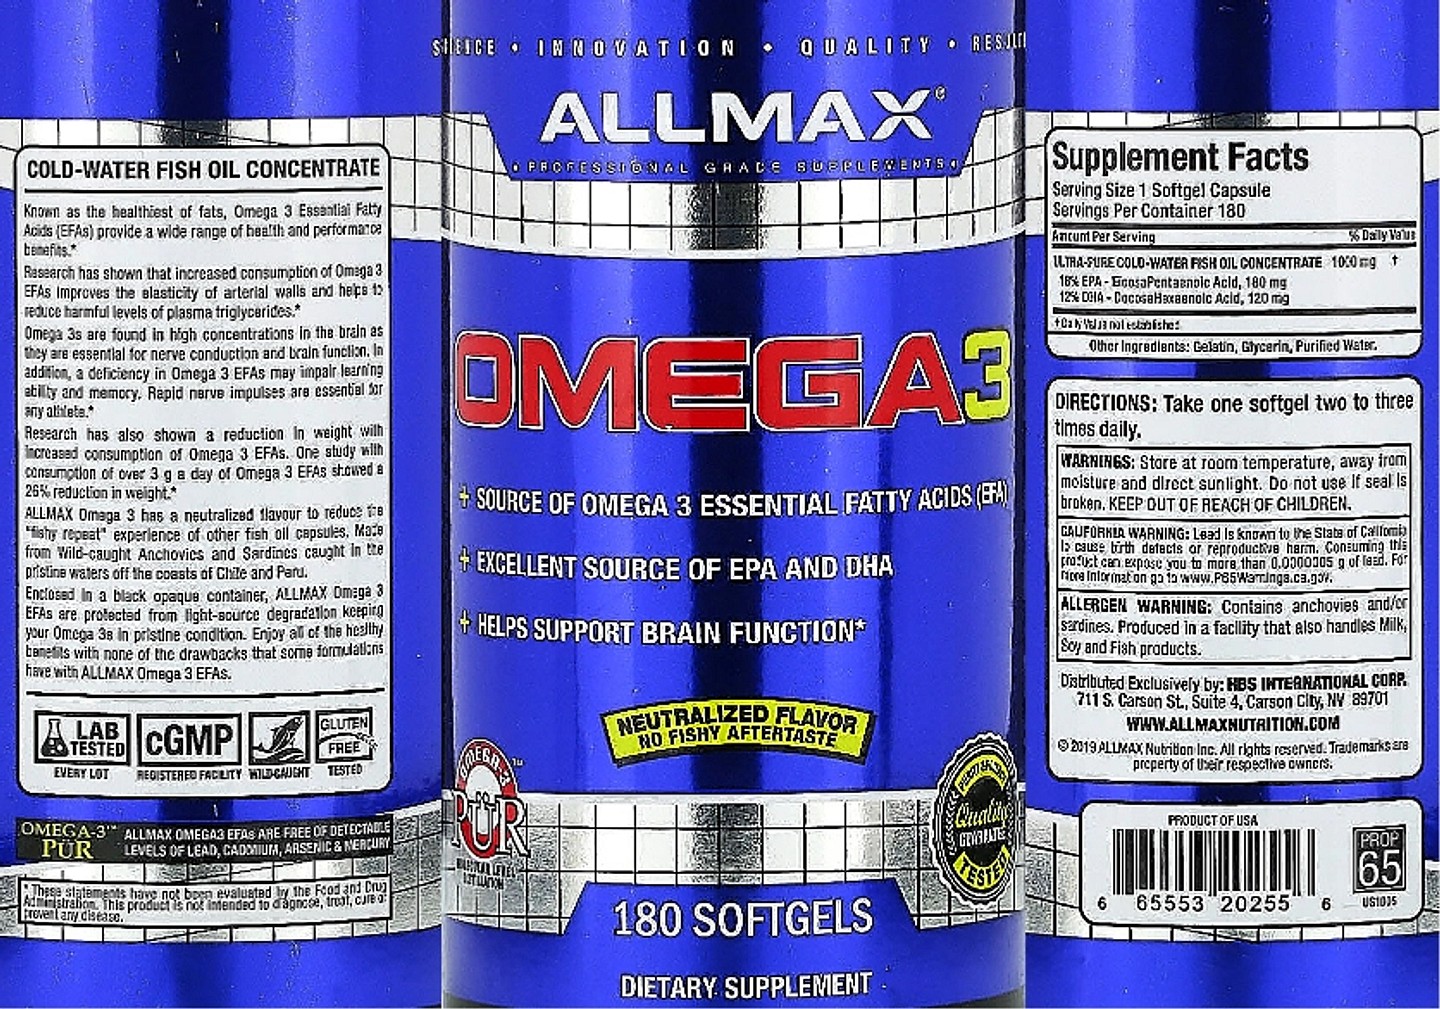 ALLMAX, Omega-3 label